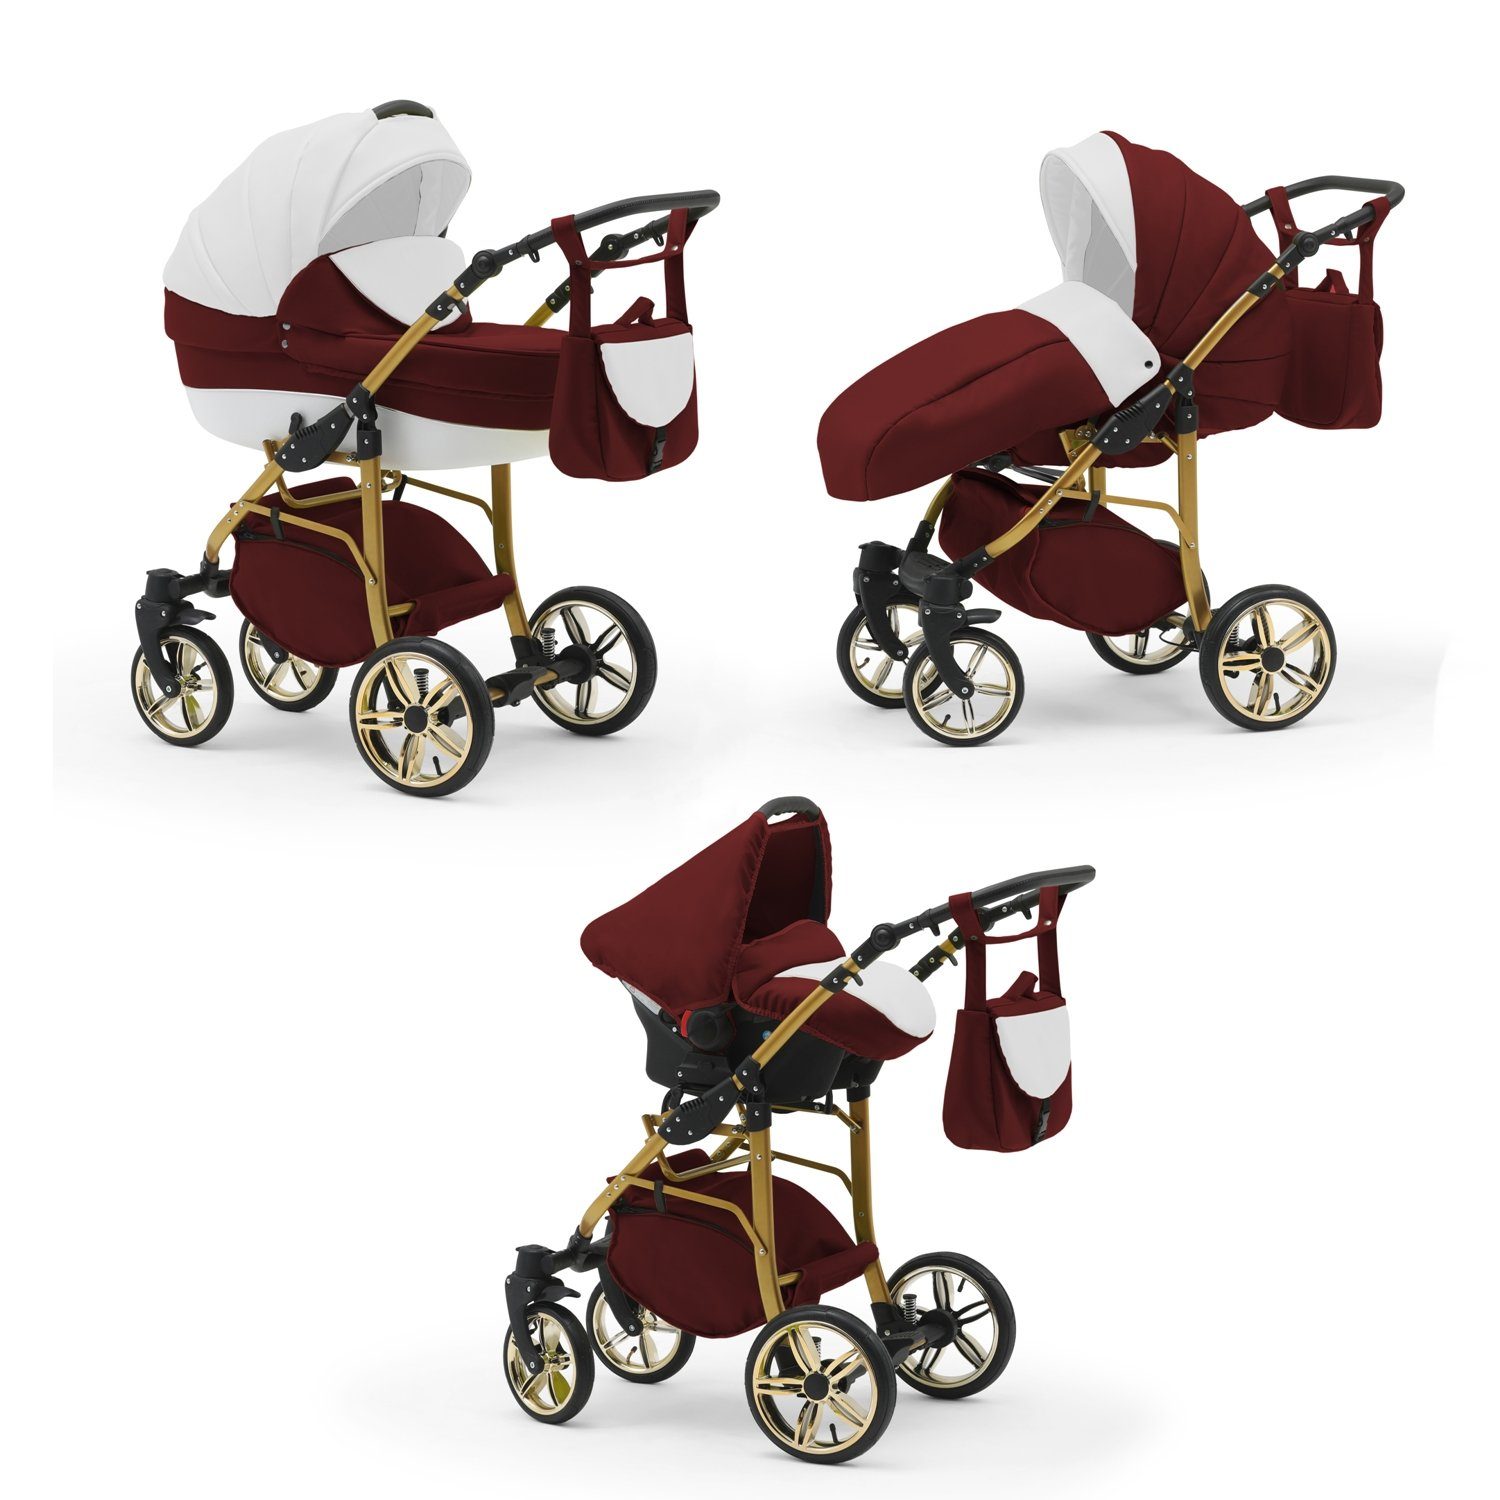 Cosmo 46 3 babies-on-wheels 1 - in Gold- Kombi-Kinderwagen Kinderwagen-Set Teile Bordeaux-Weiß-Weiß 16 in Farben